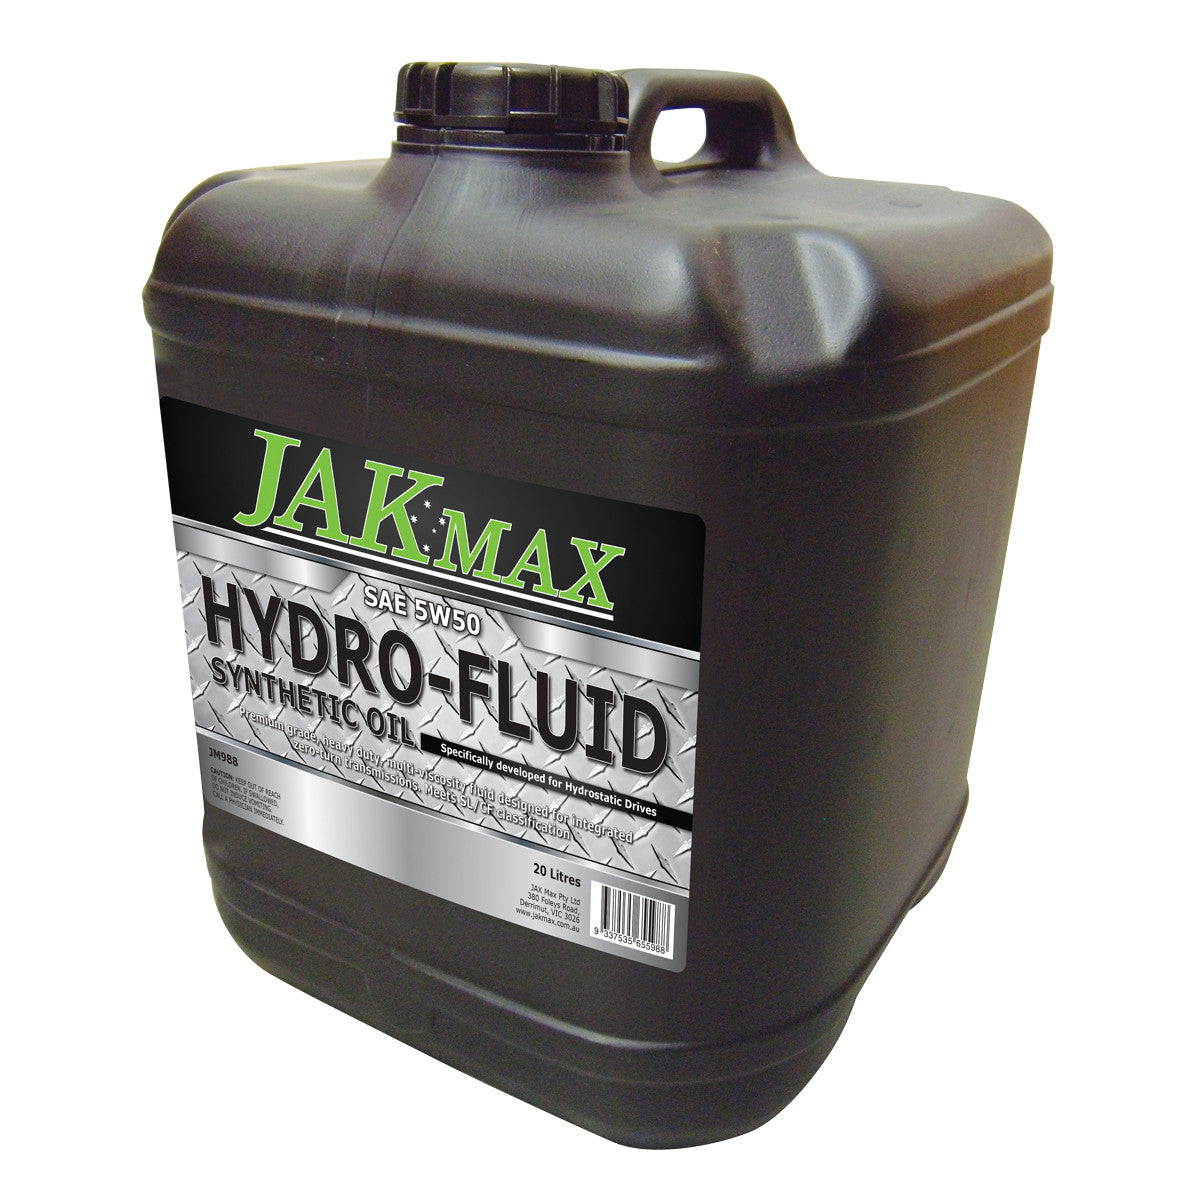 JakMax SAE 5W50 Synthetic Hydro-Fluid Oil 20L